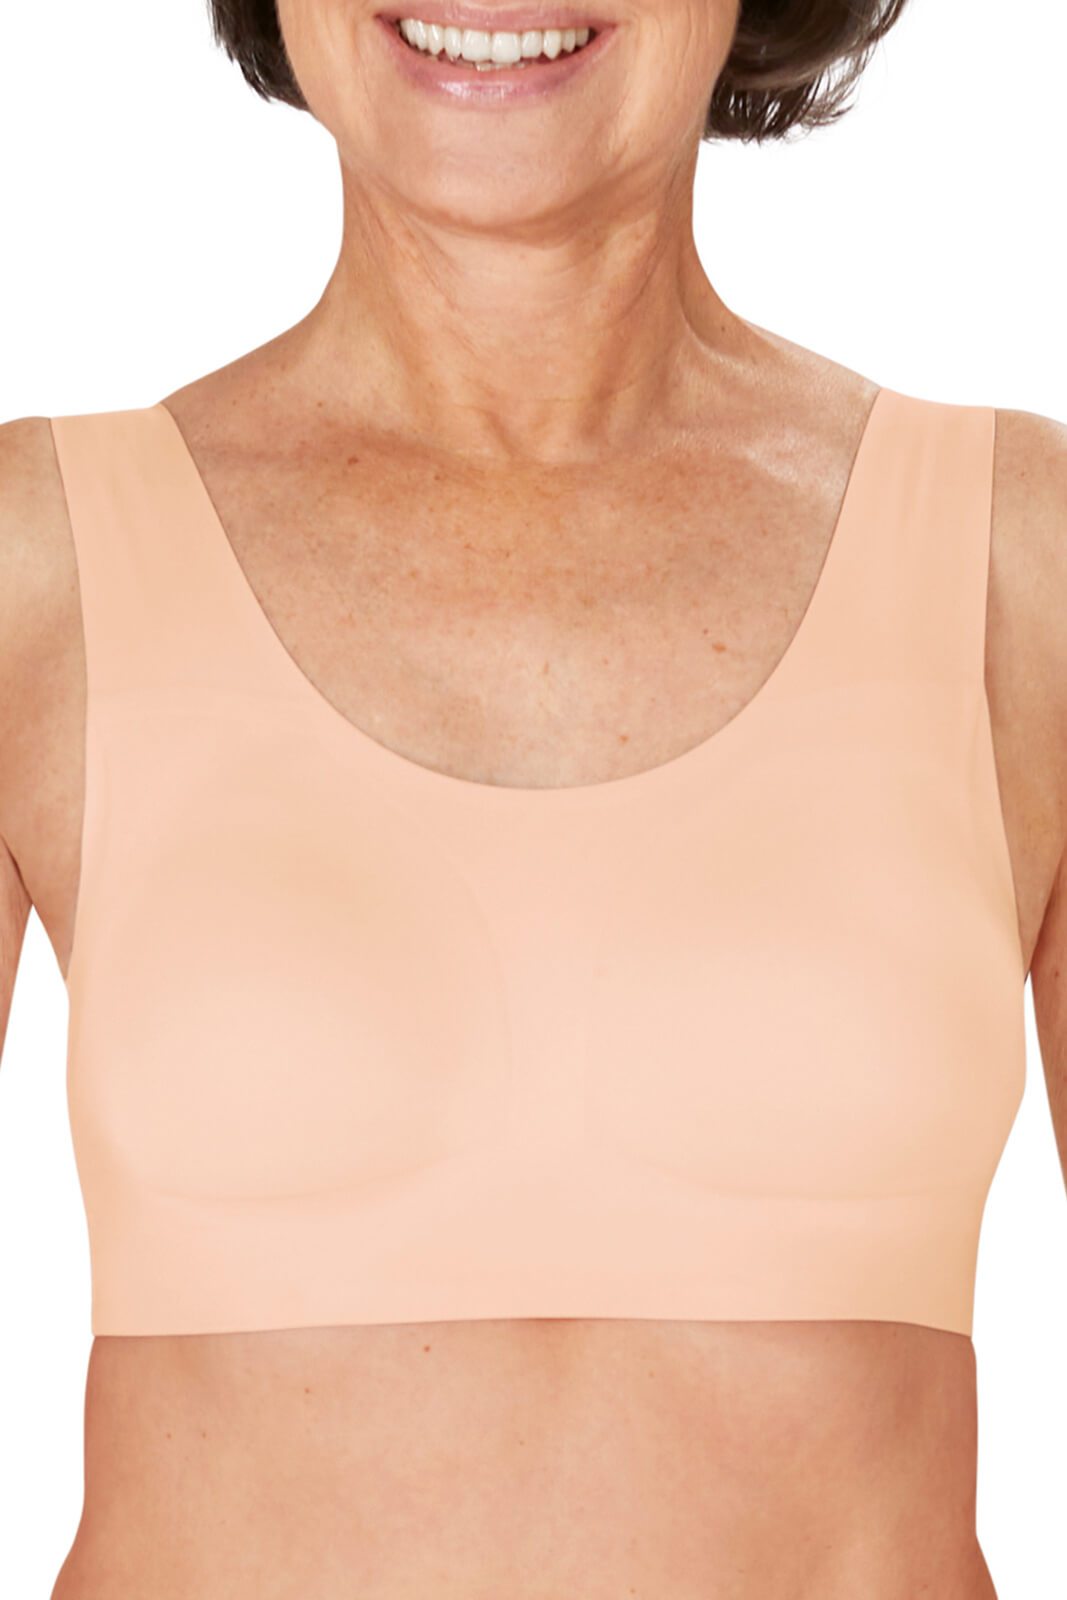 Eliza Wire-Free Mastectomy Bra  Amoena Seamless Bra with Pocket - GraceMd  - Mastectomy Bras & Breast Forms